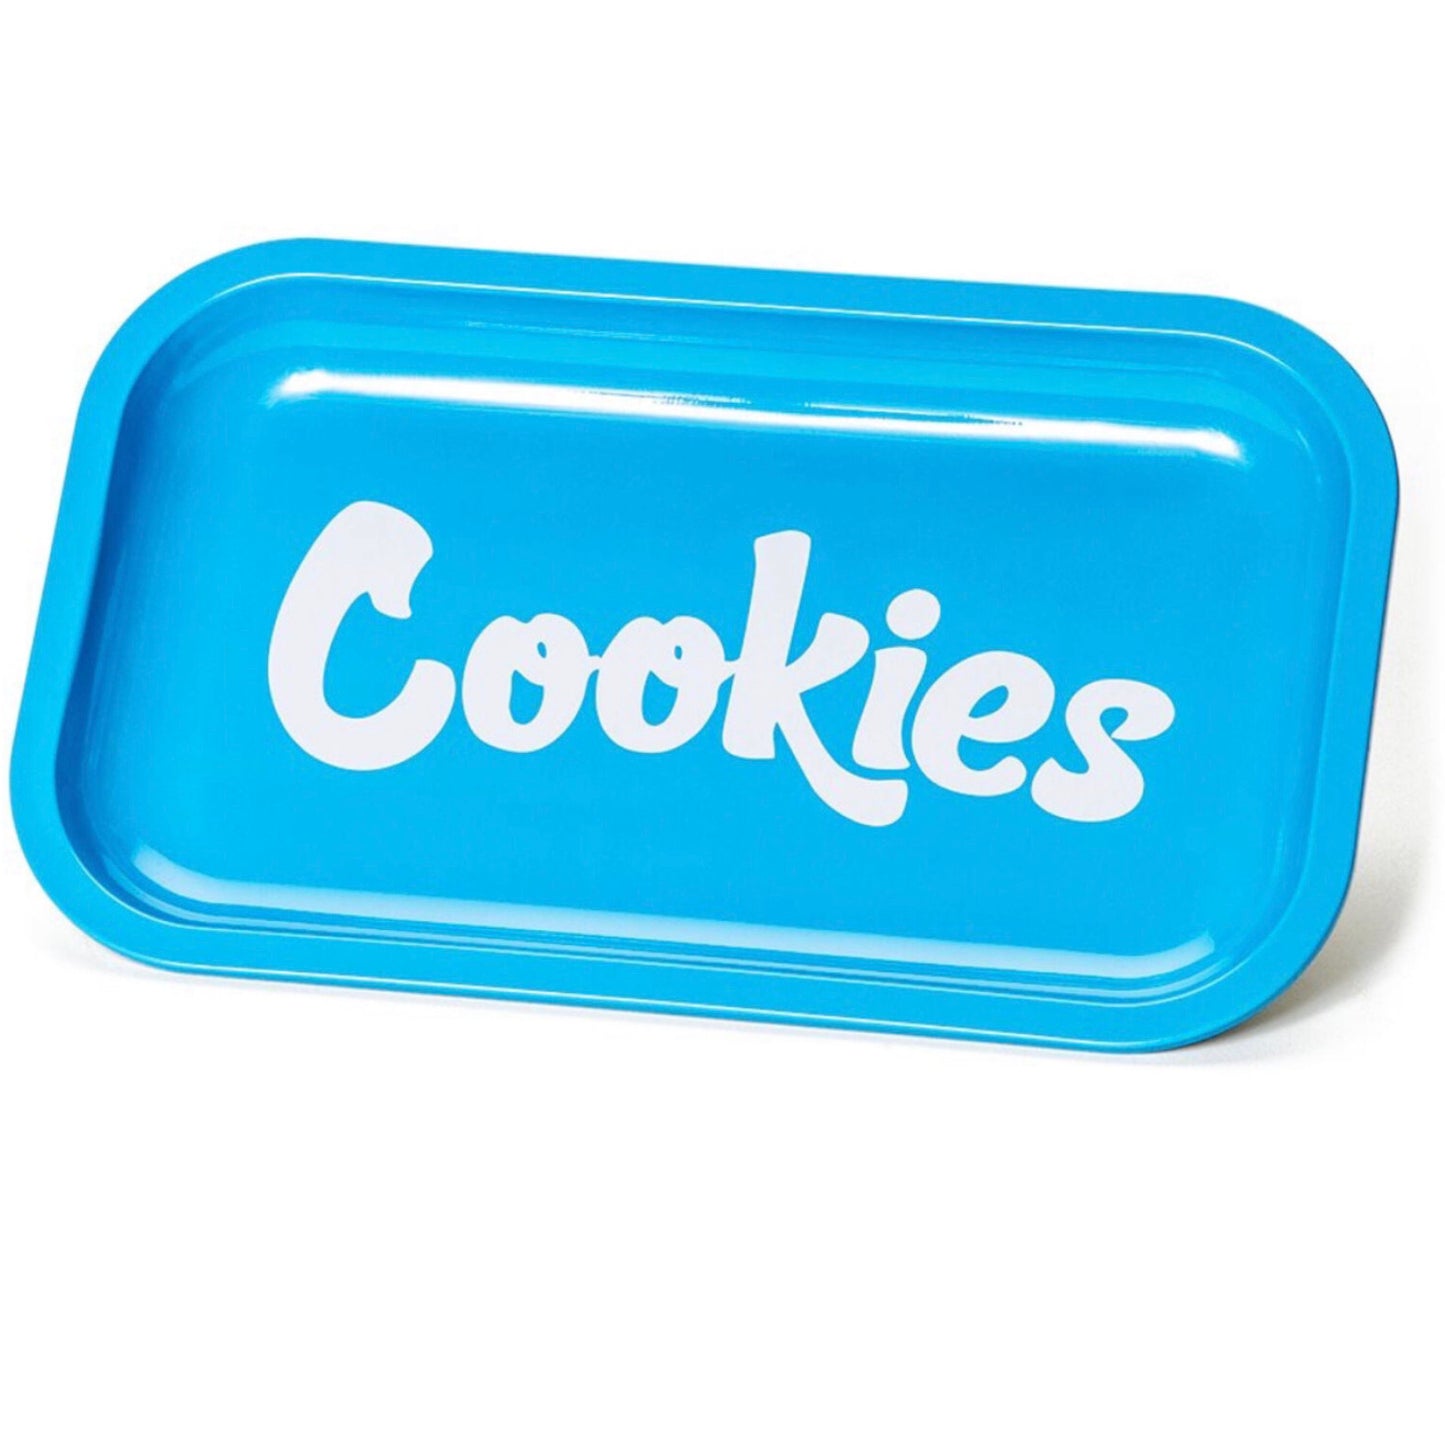 Cookies Plateau Bleu (Medium)